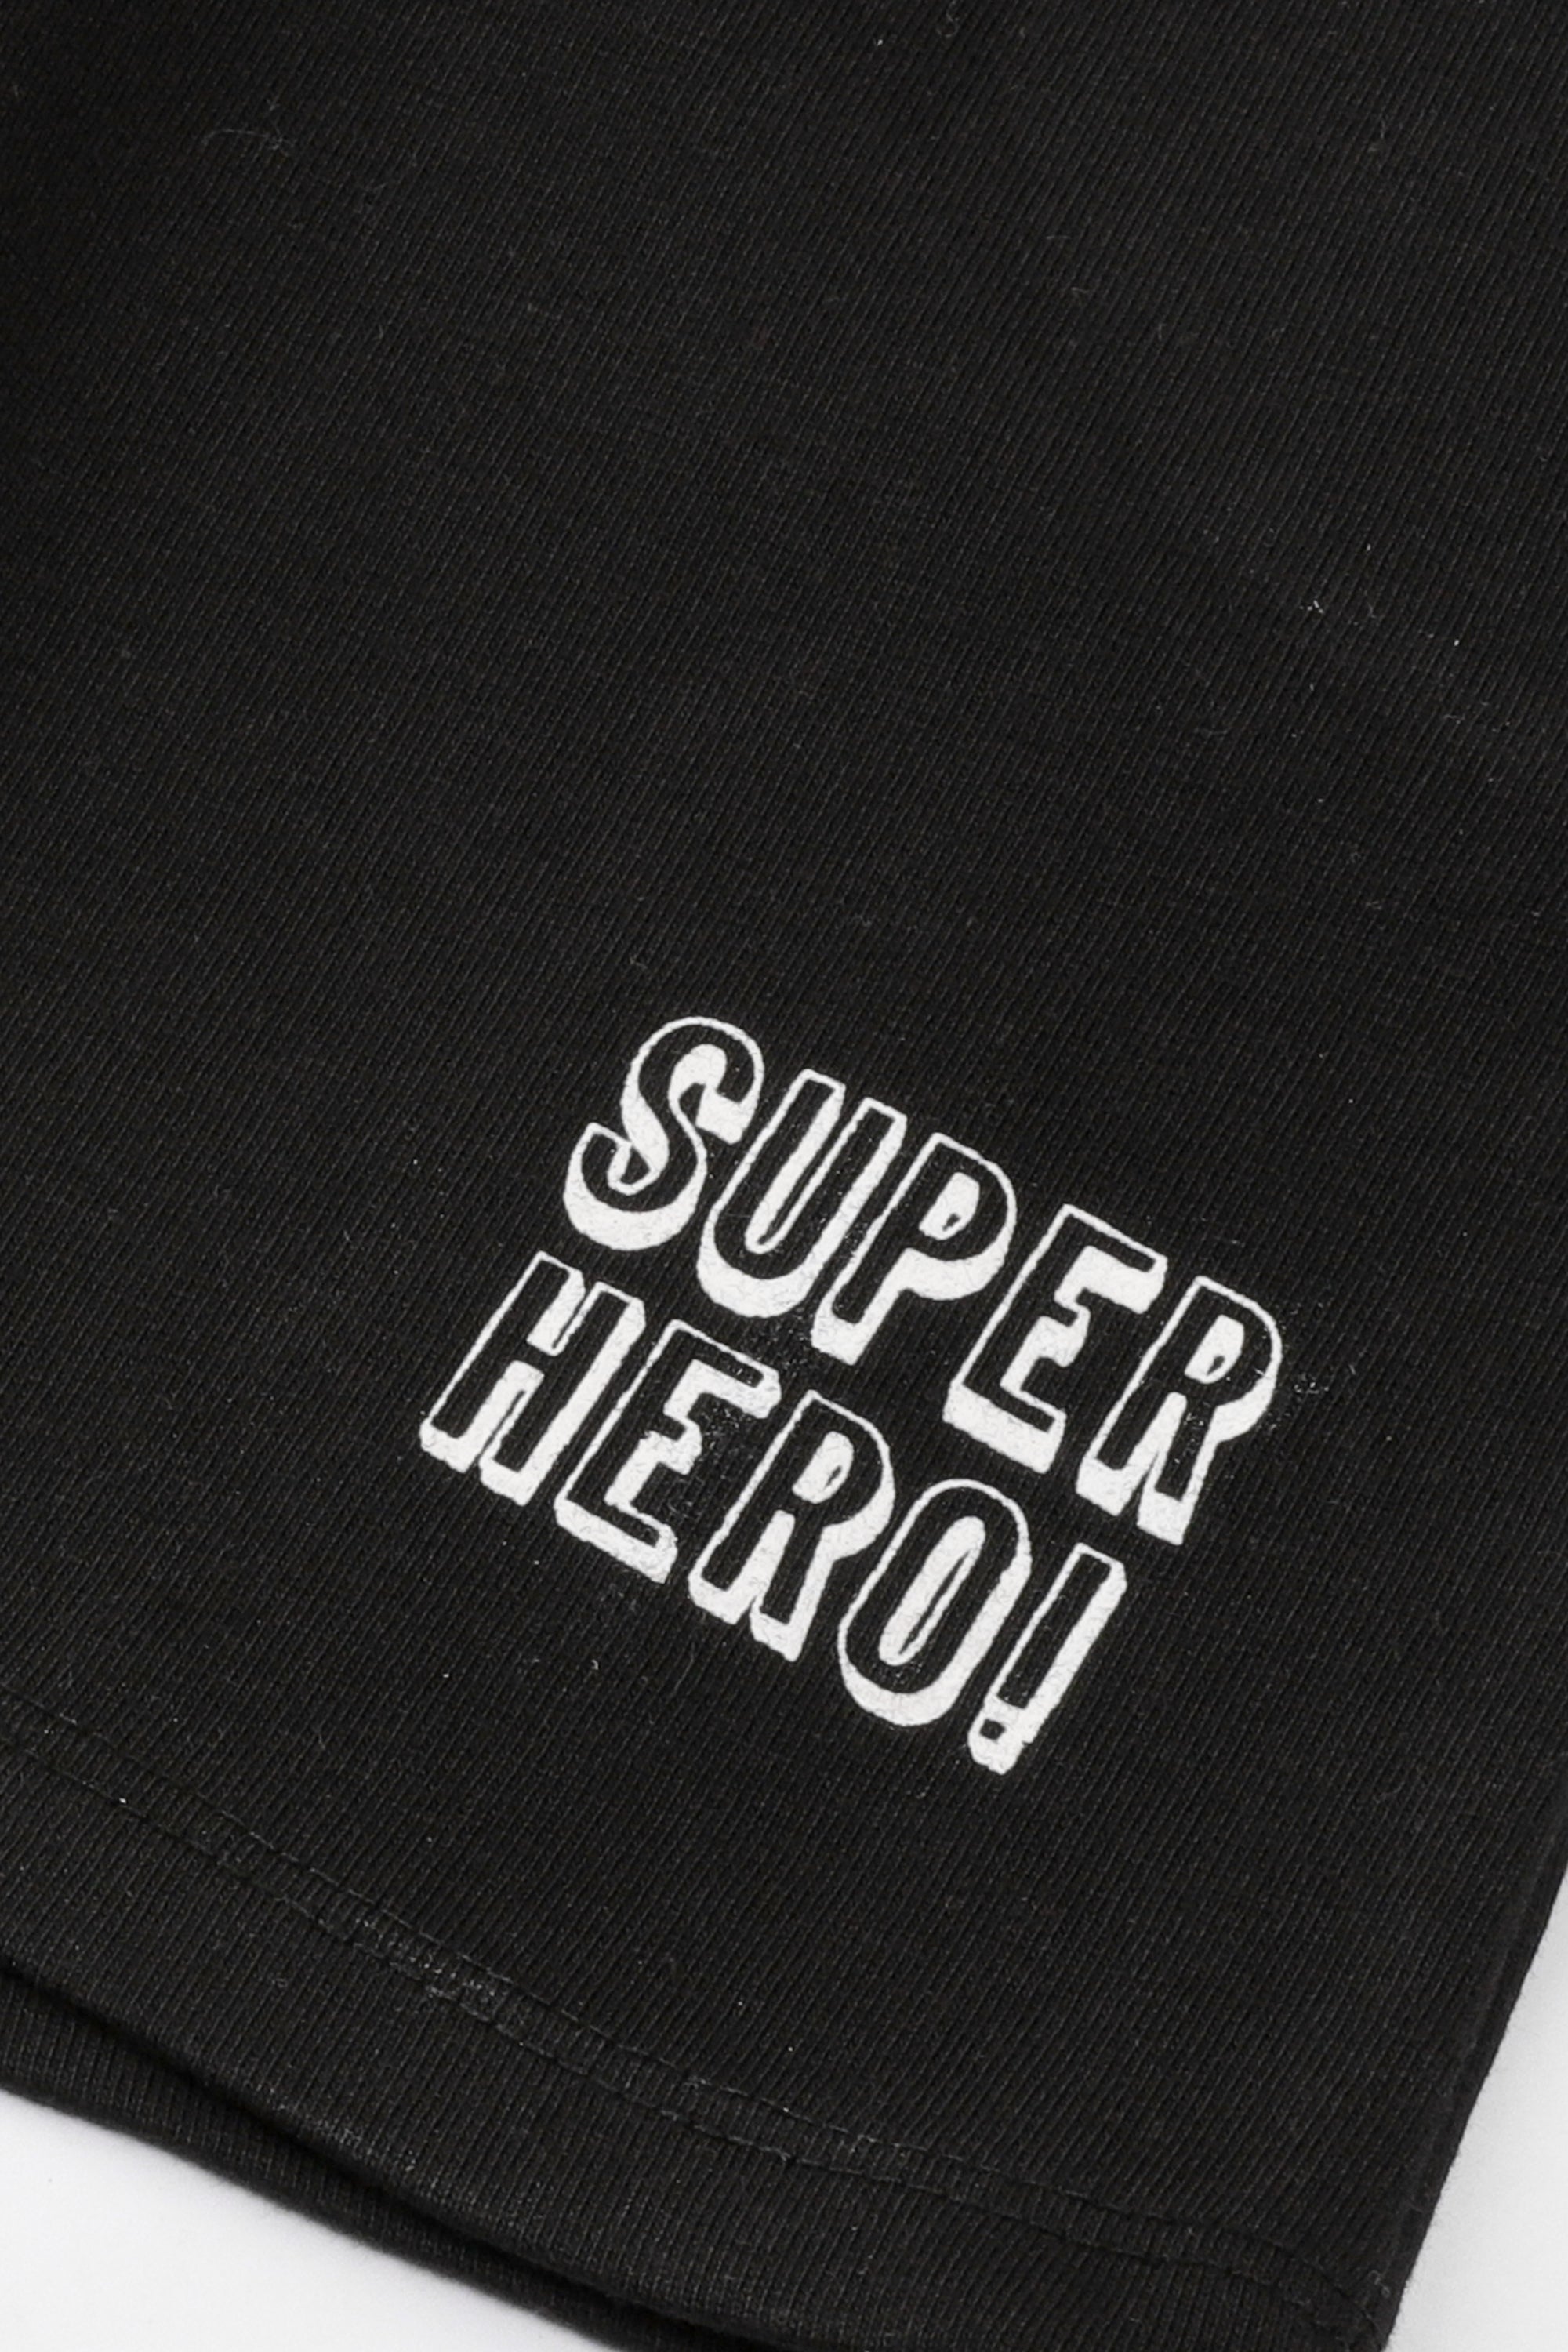 Super Hero Shorts